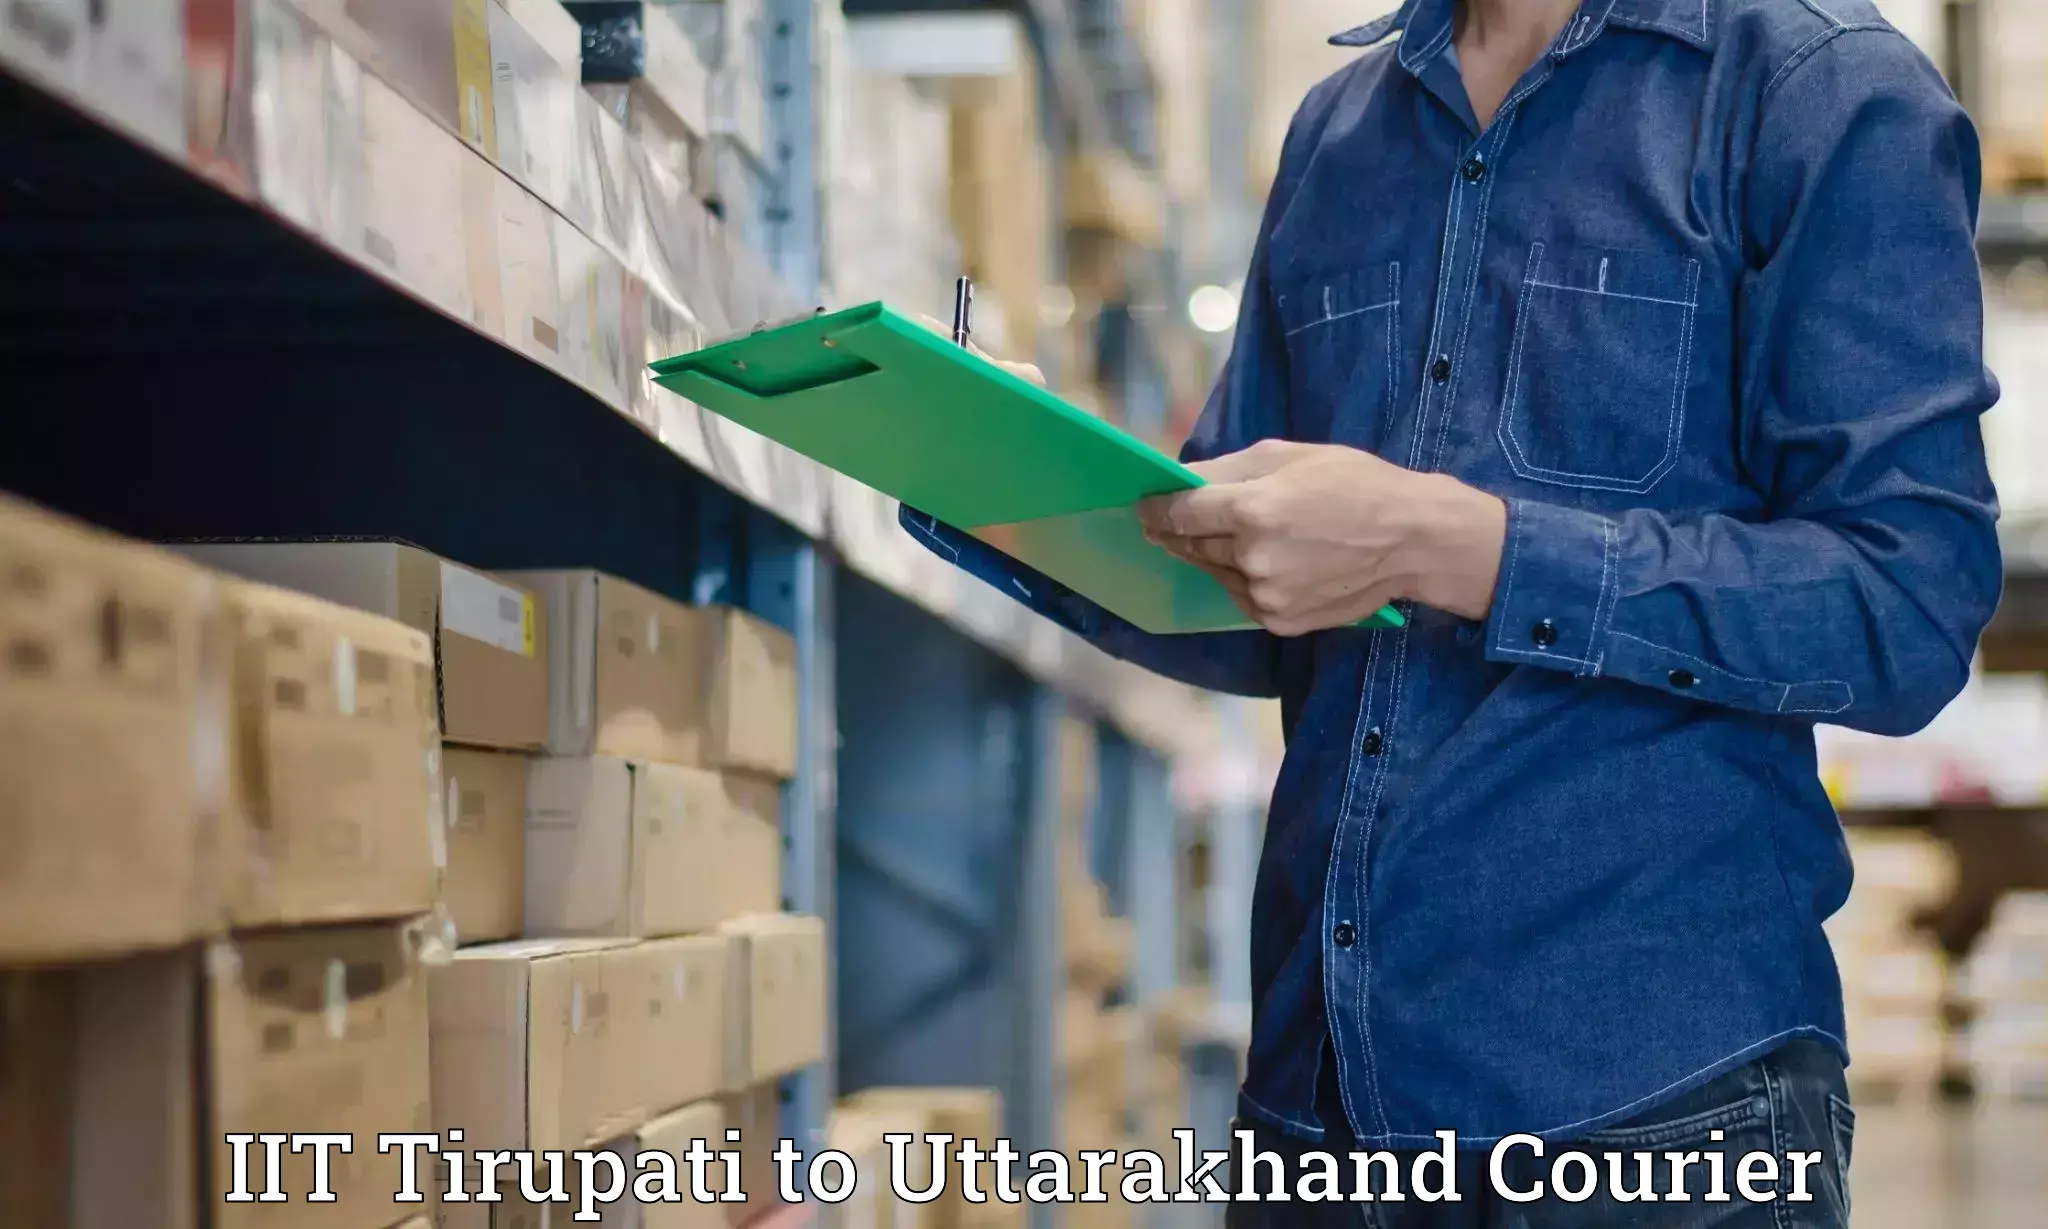 Reliable courier service IIT Tirupati to Uttarakhand